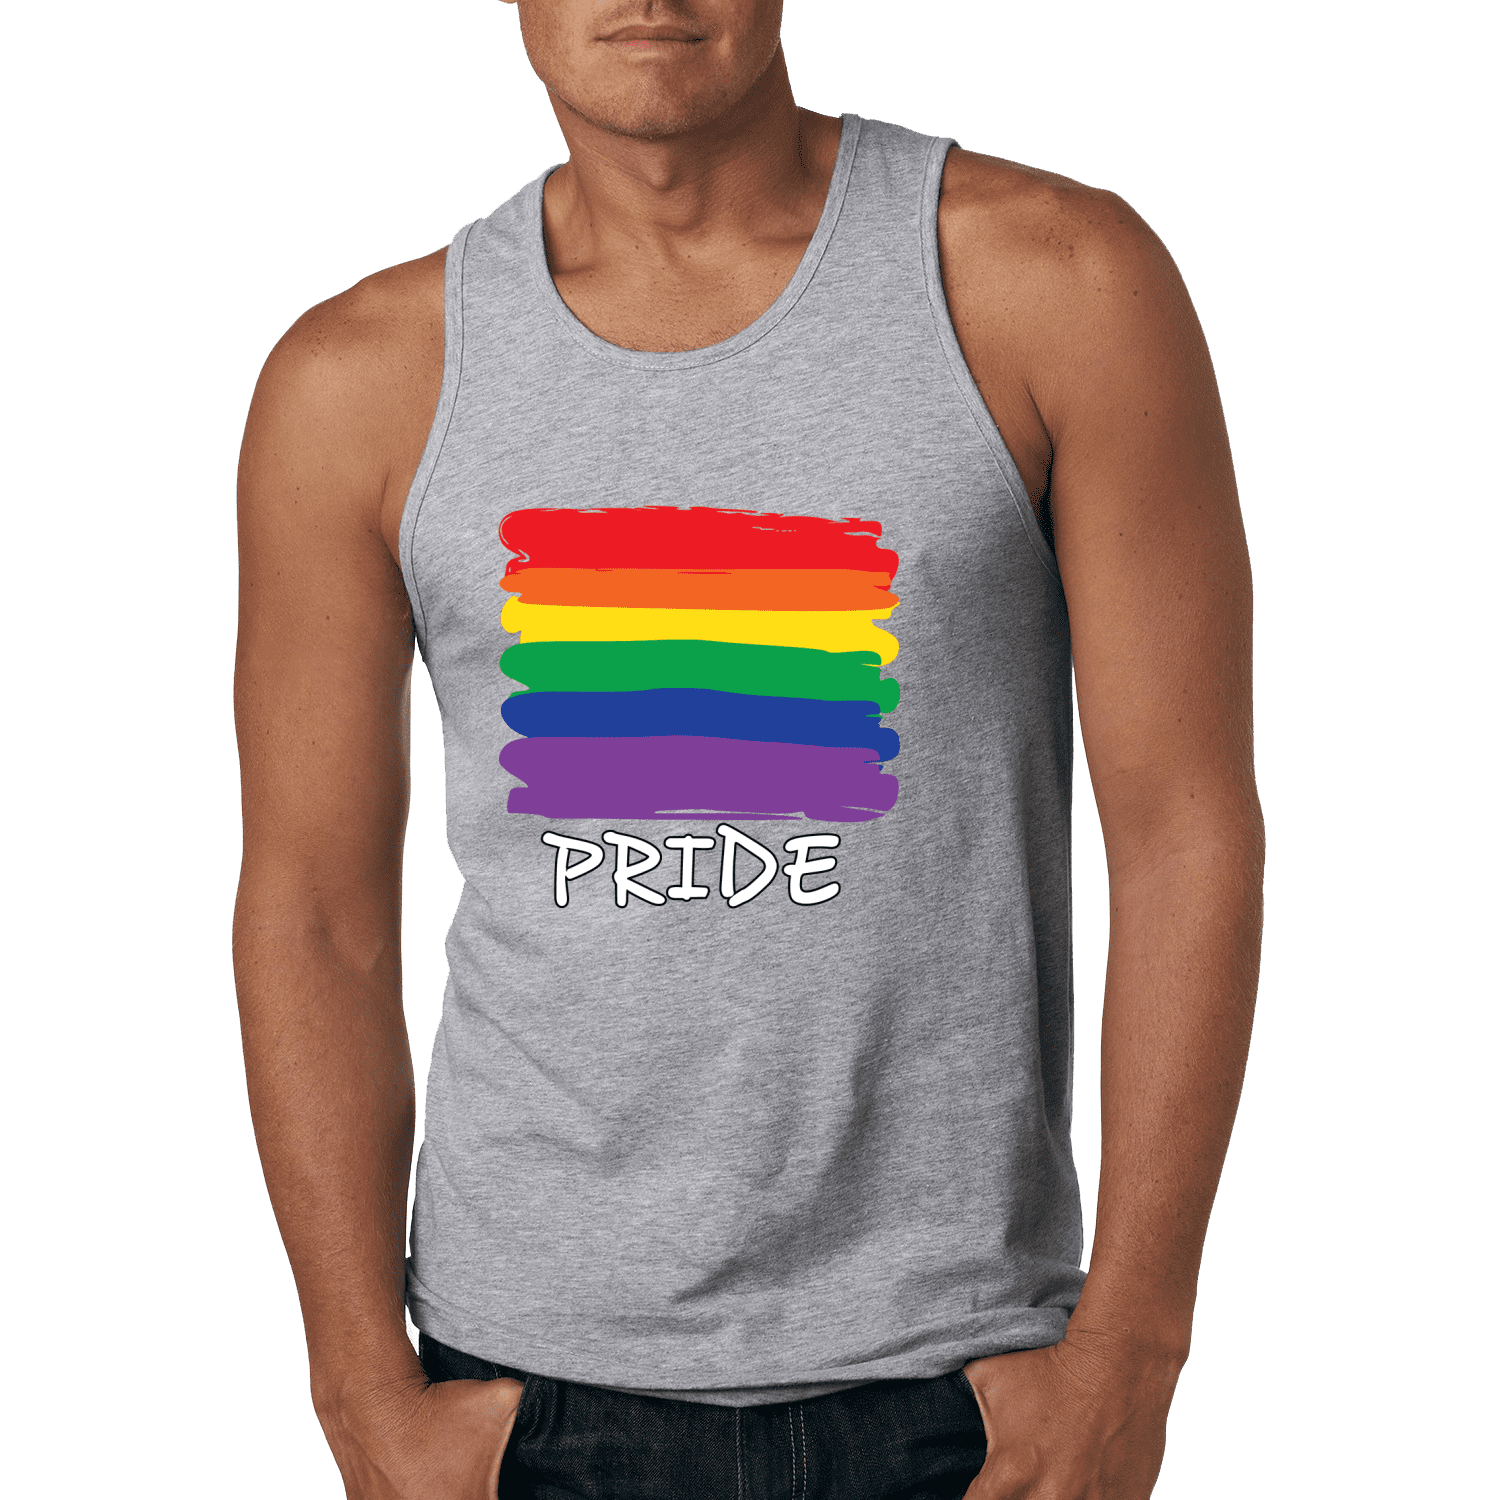 the new gay pride logo